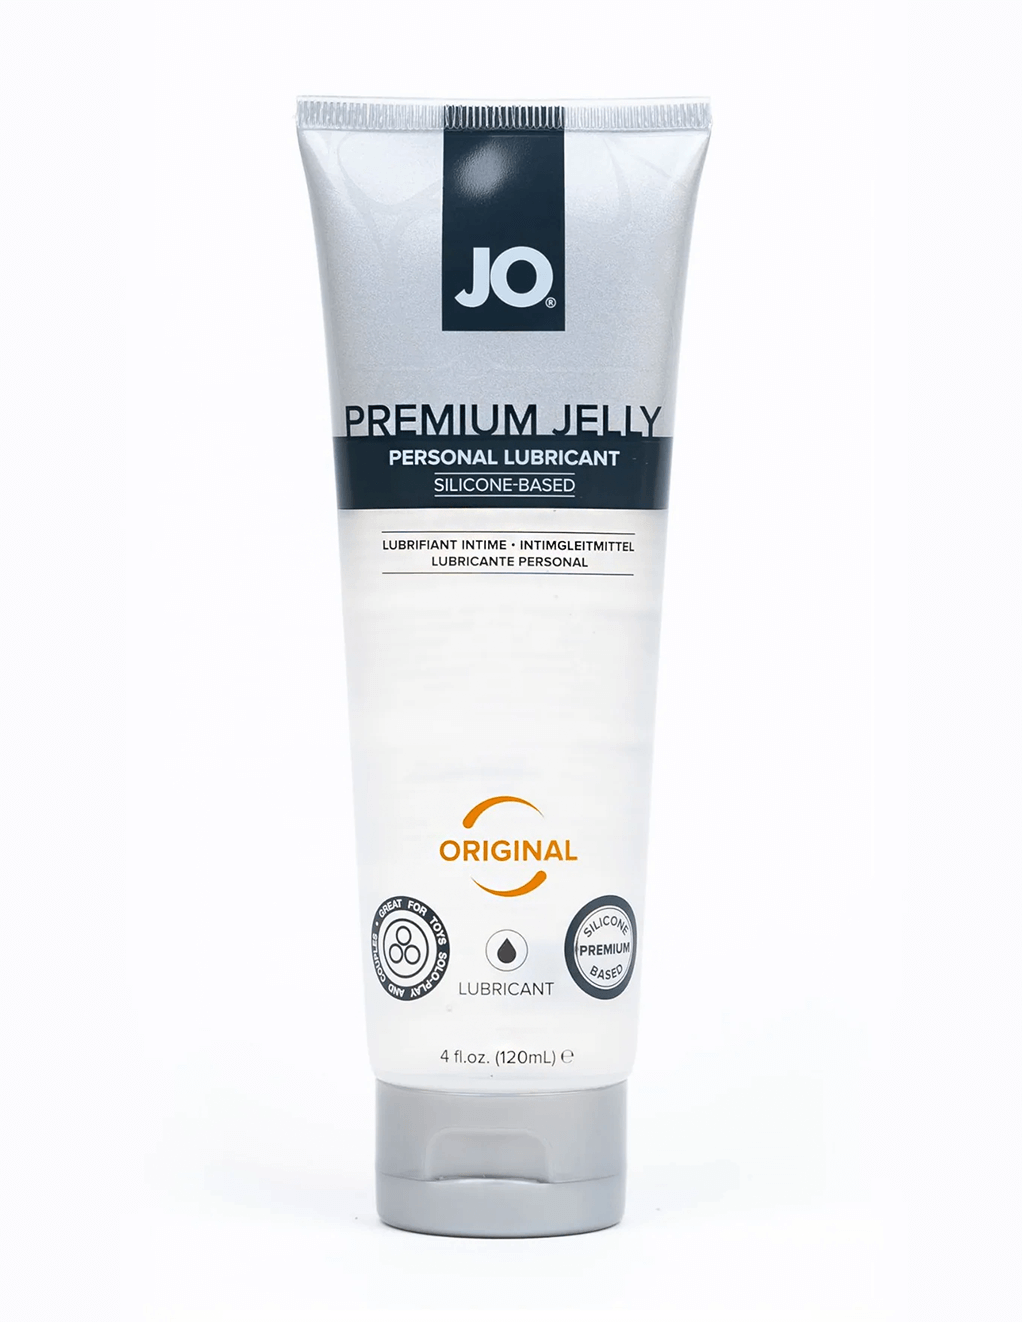 JO Premium Jelly - Main